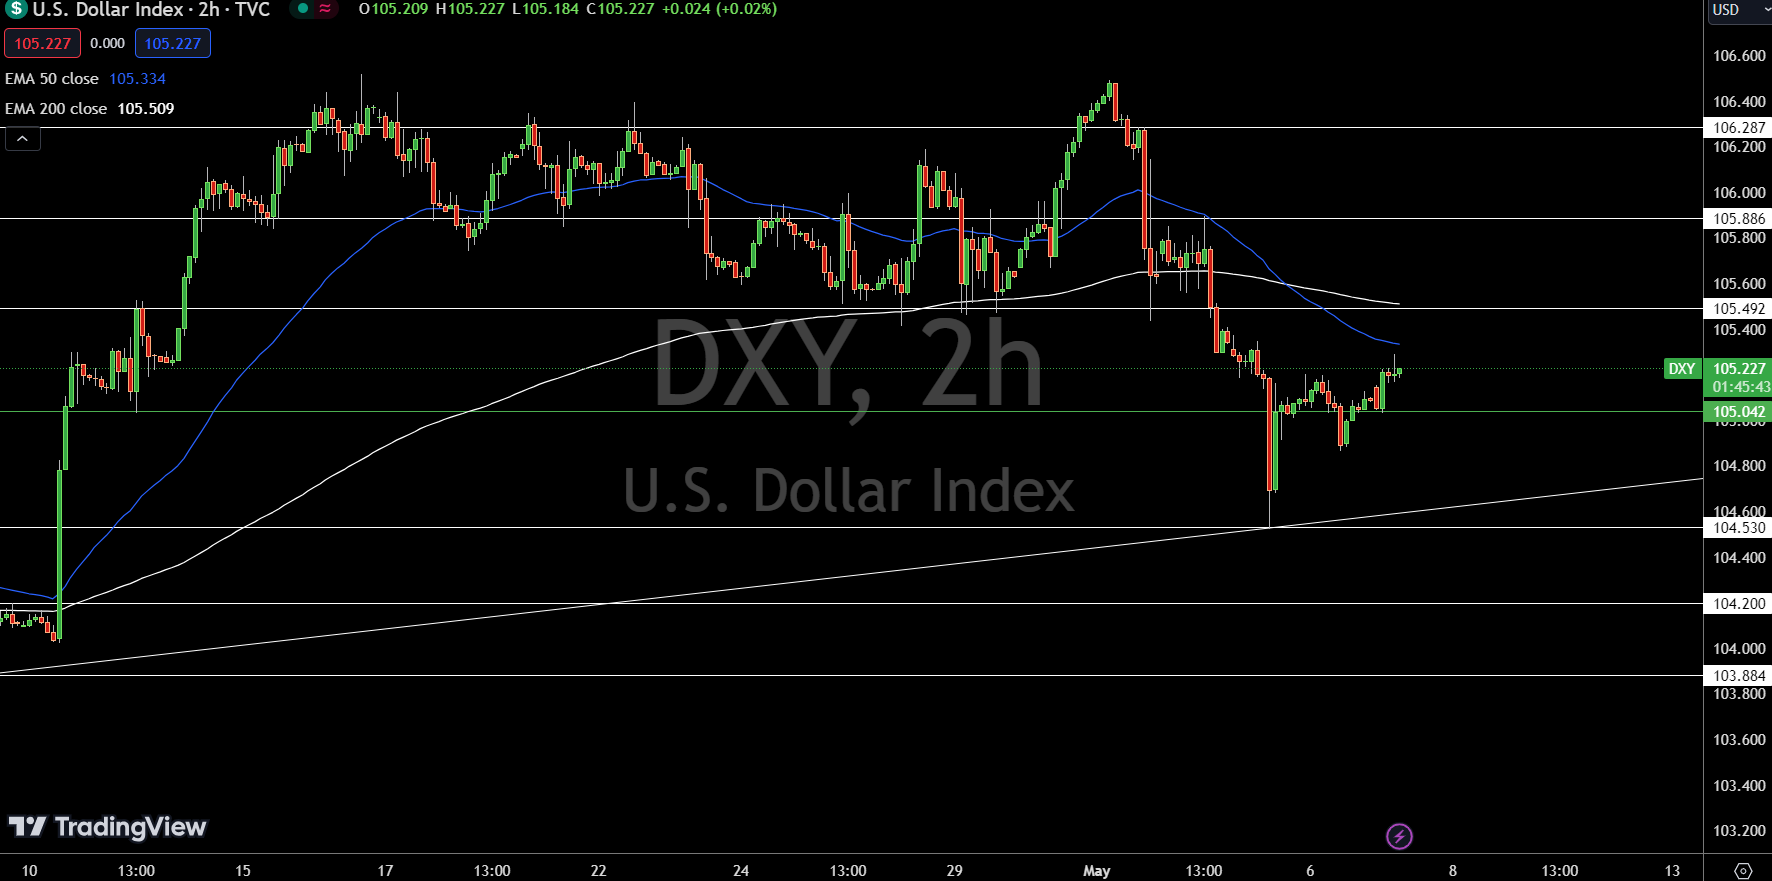 Dollar Index